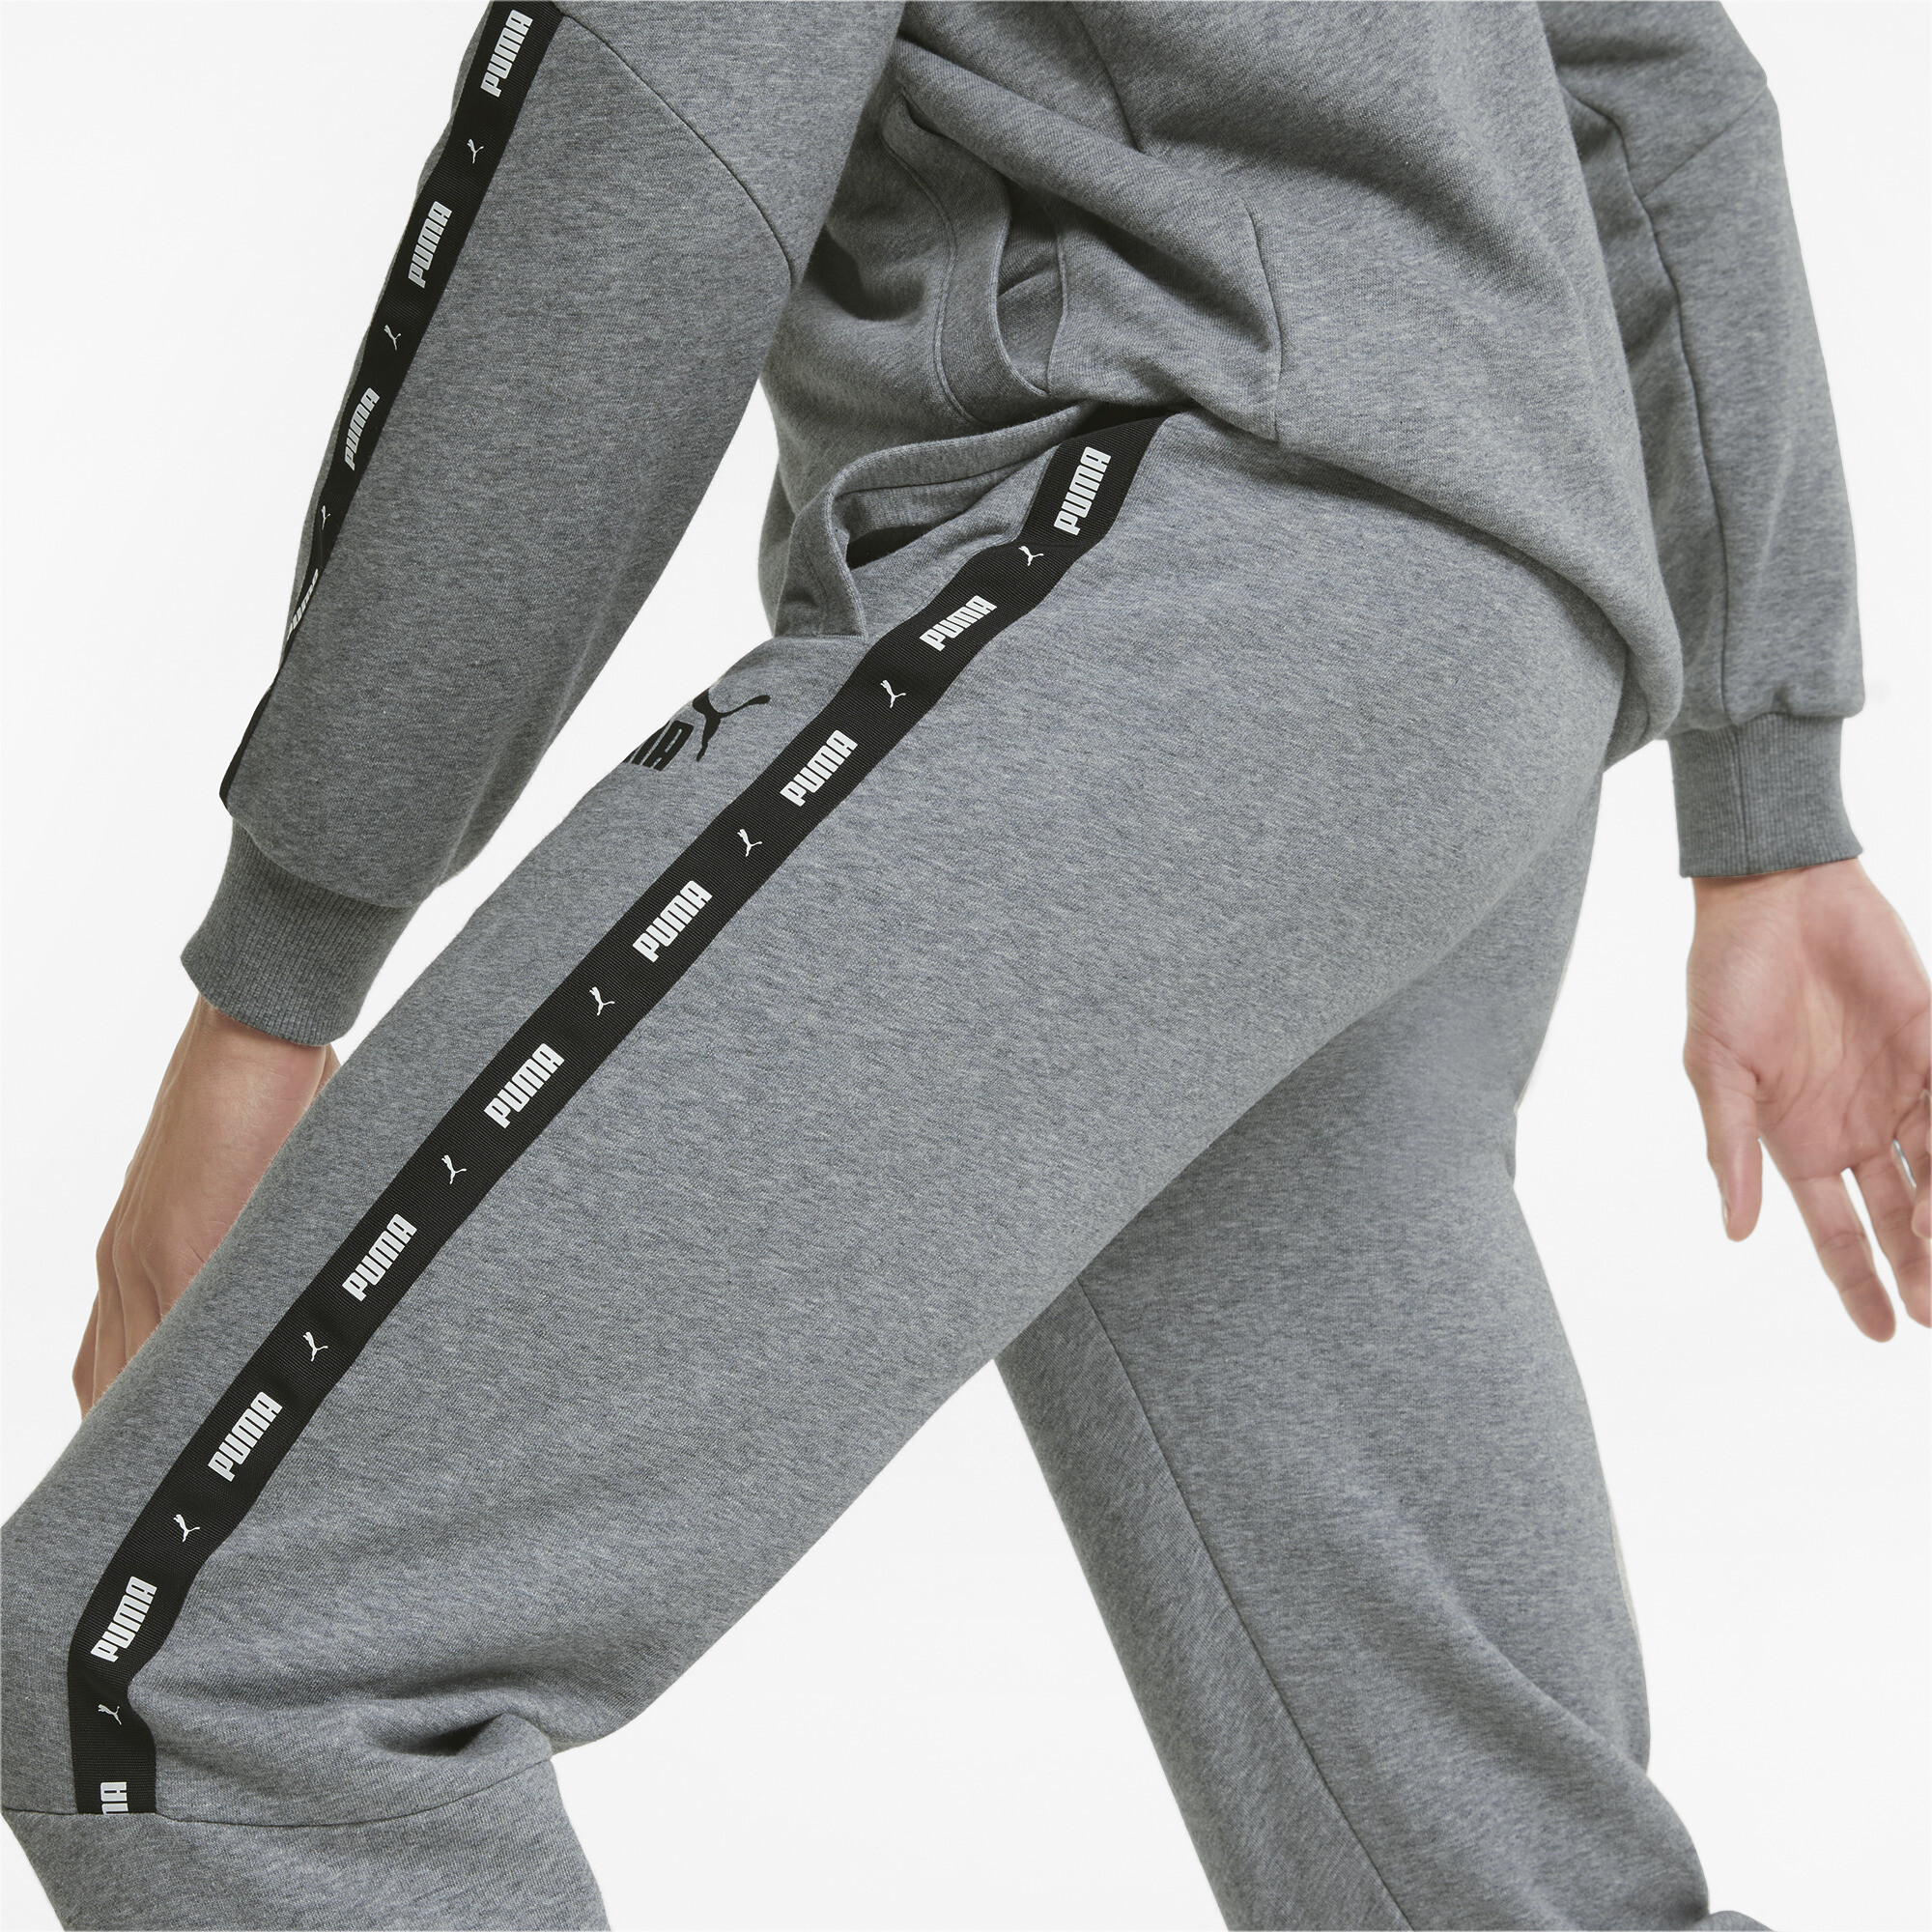 Men's Puma Essentials+ Tape's Sweatpants, Gray, Size XL, Clothing